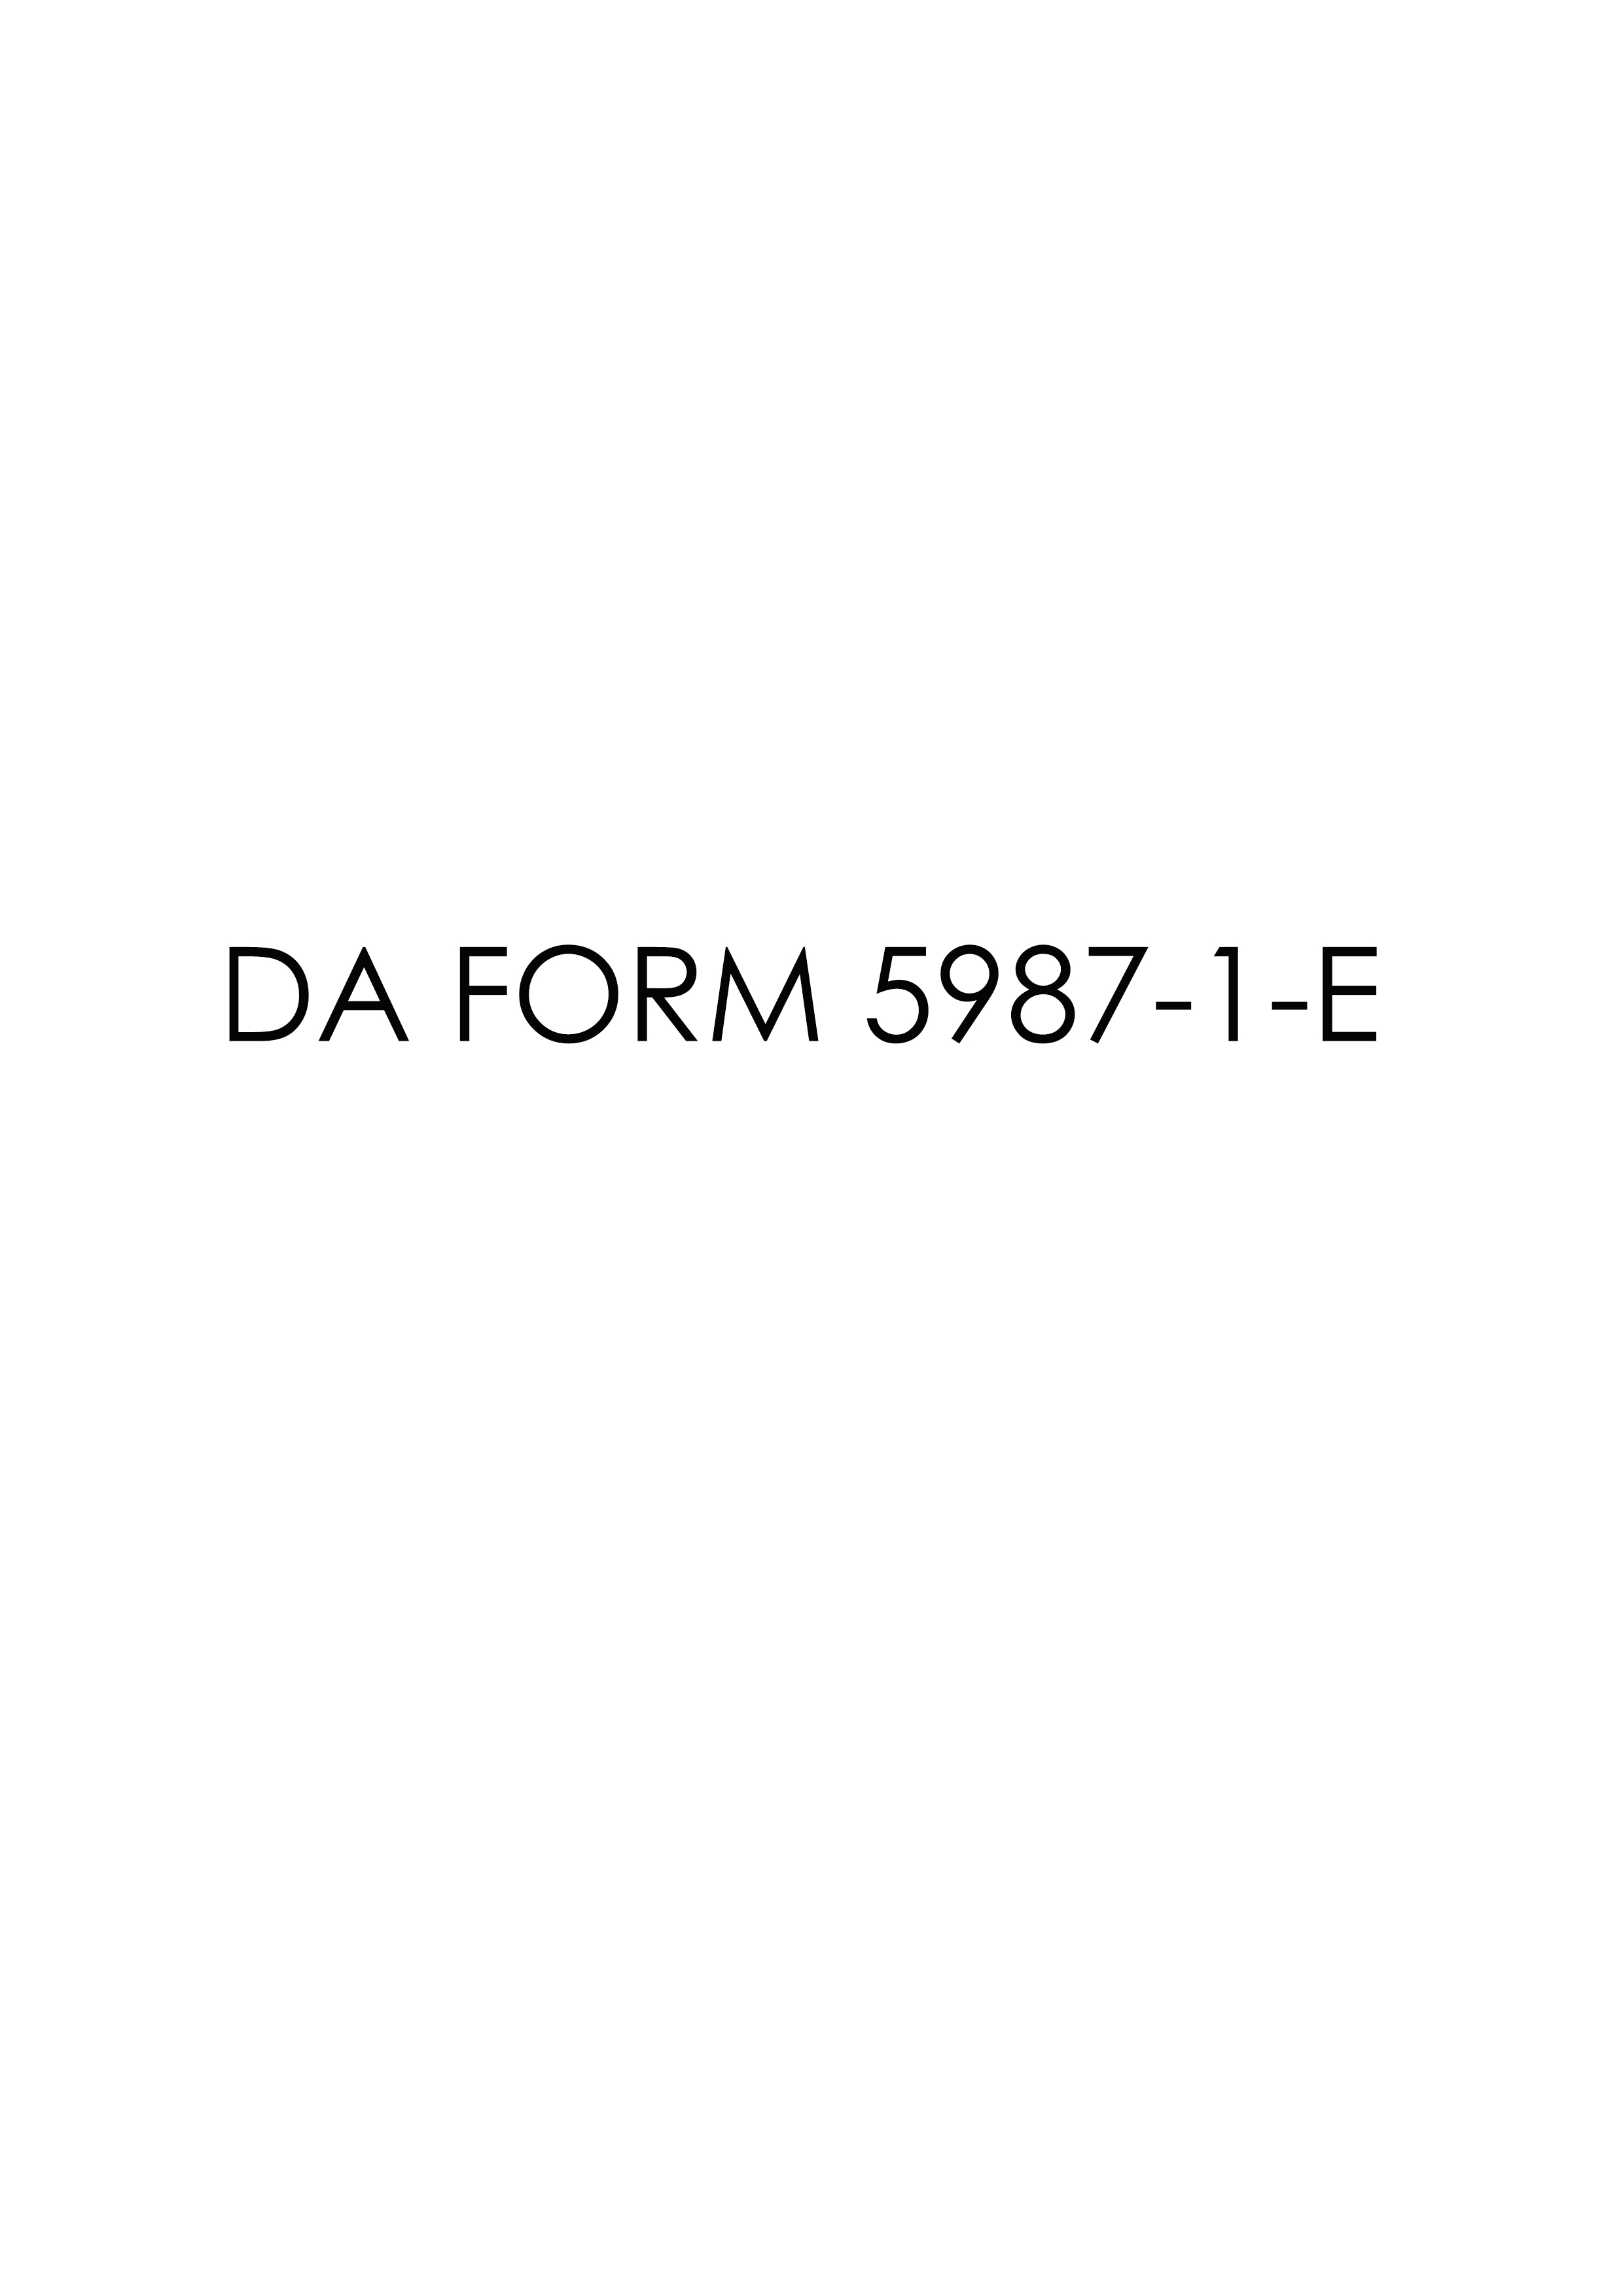 da Form 5987-1-E fillable